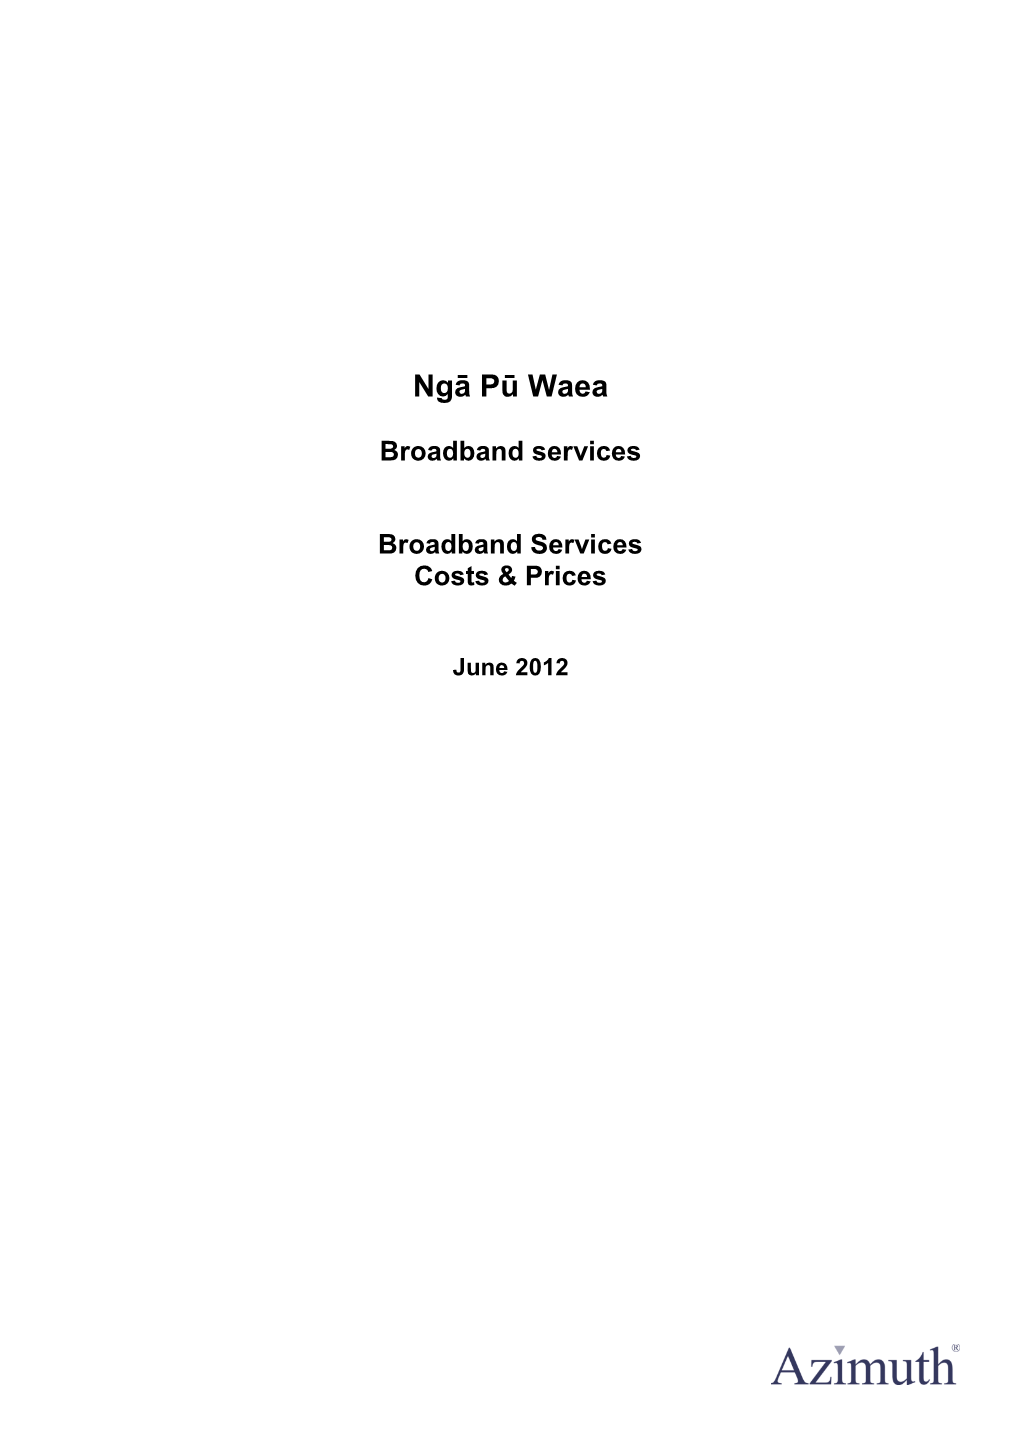 Nga Pu Waea | Broadband Services Costs & Prices June 2012